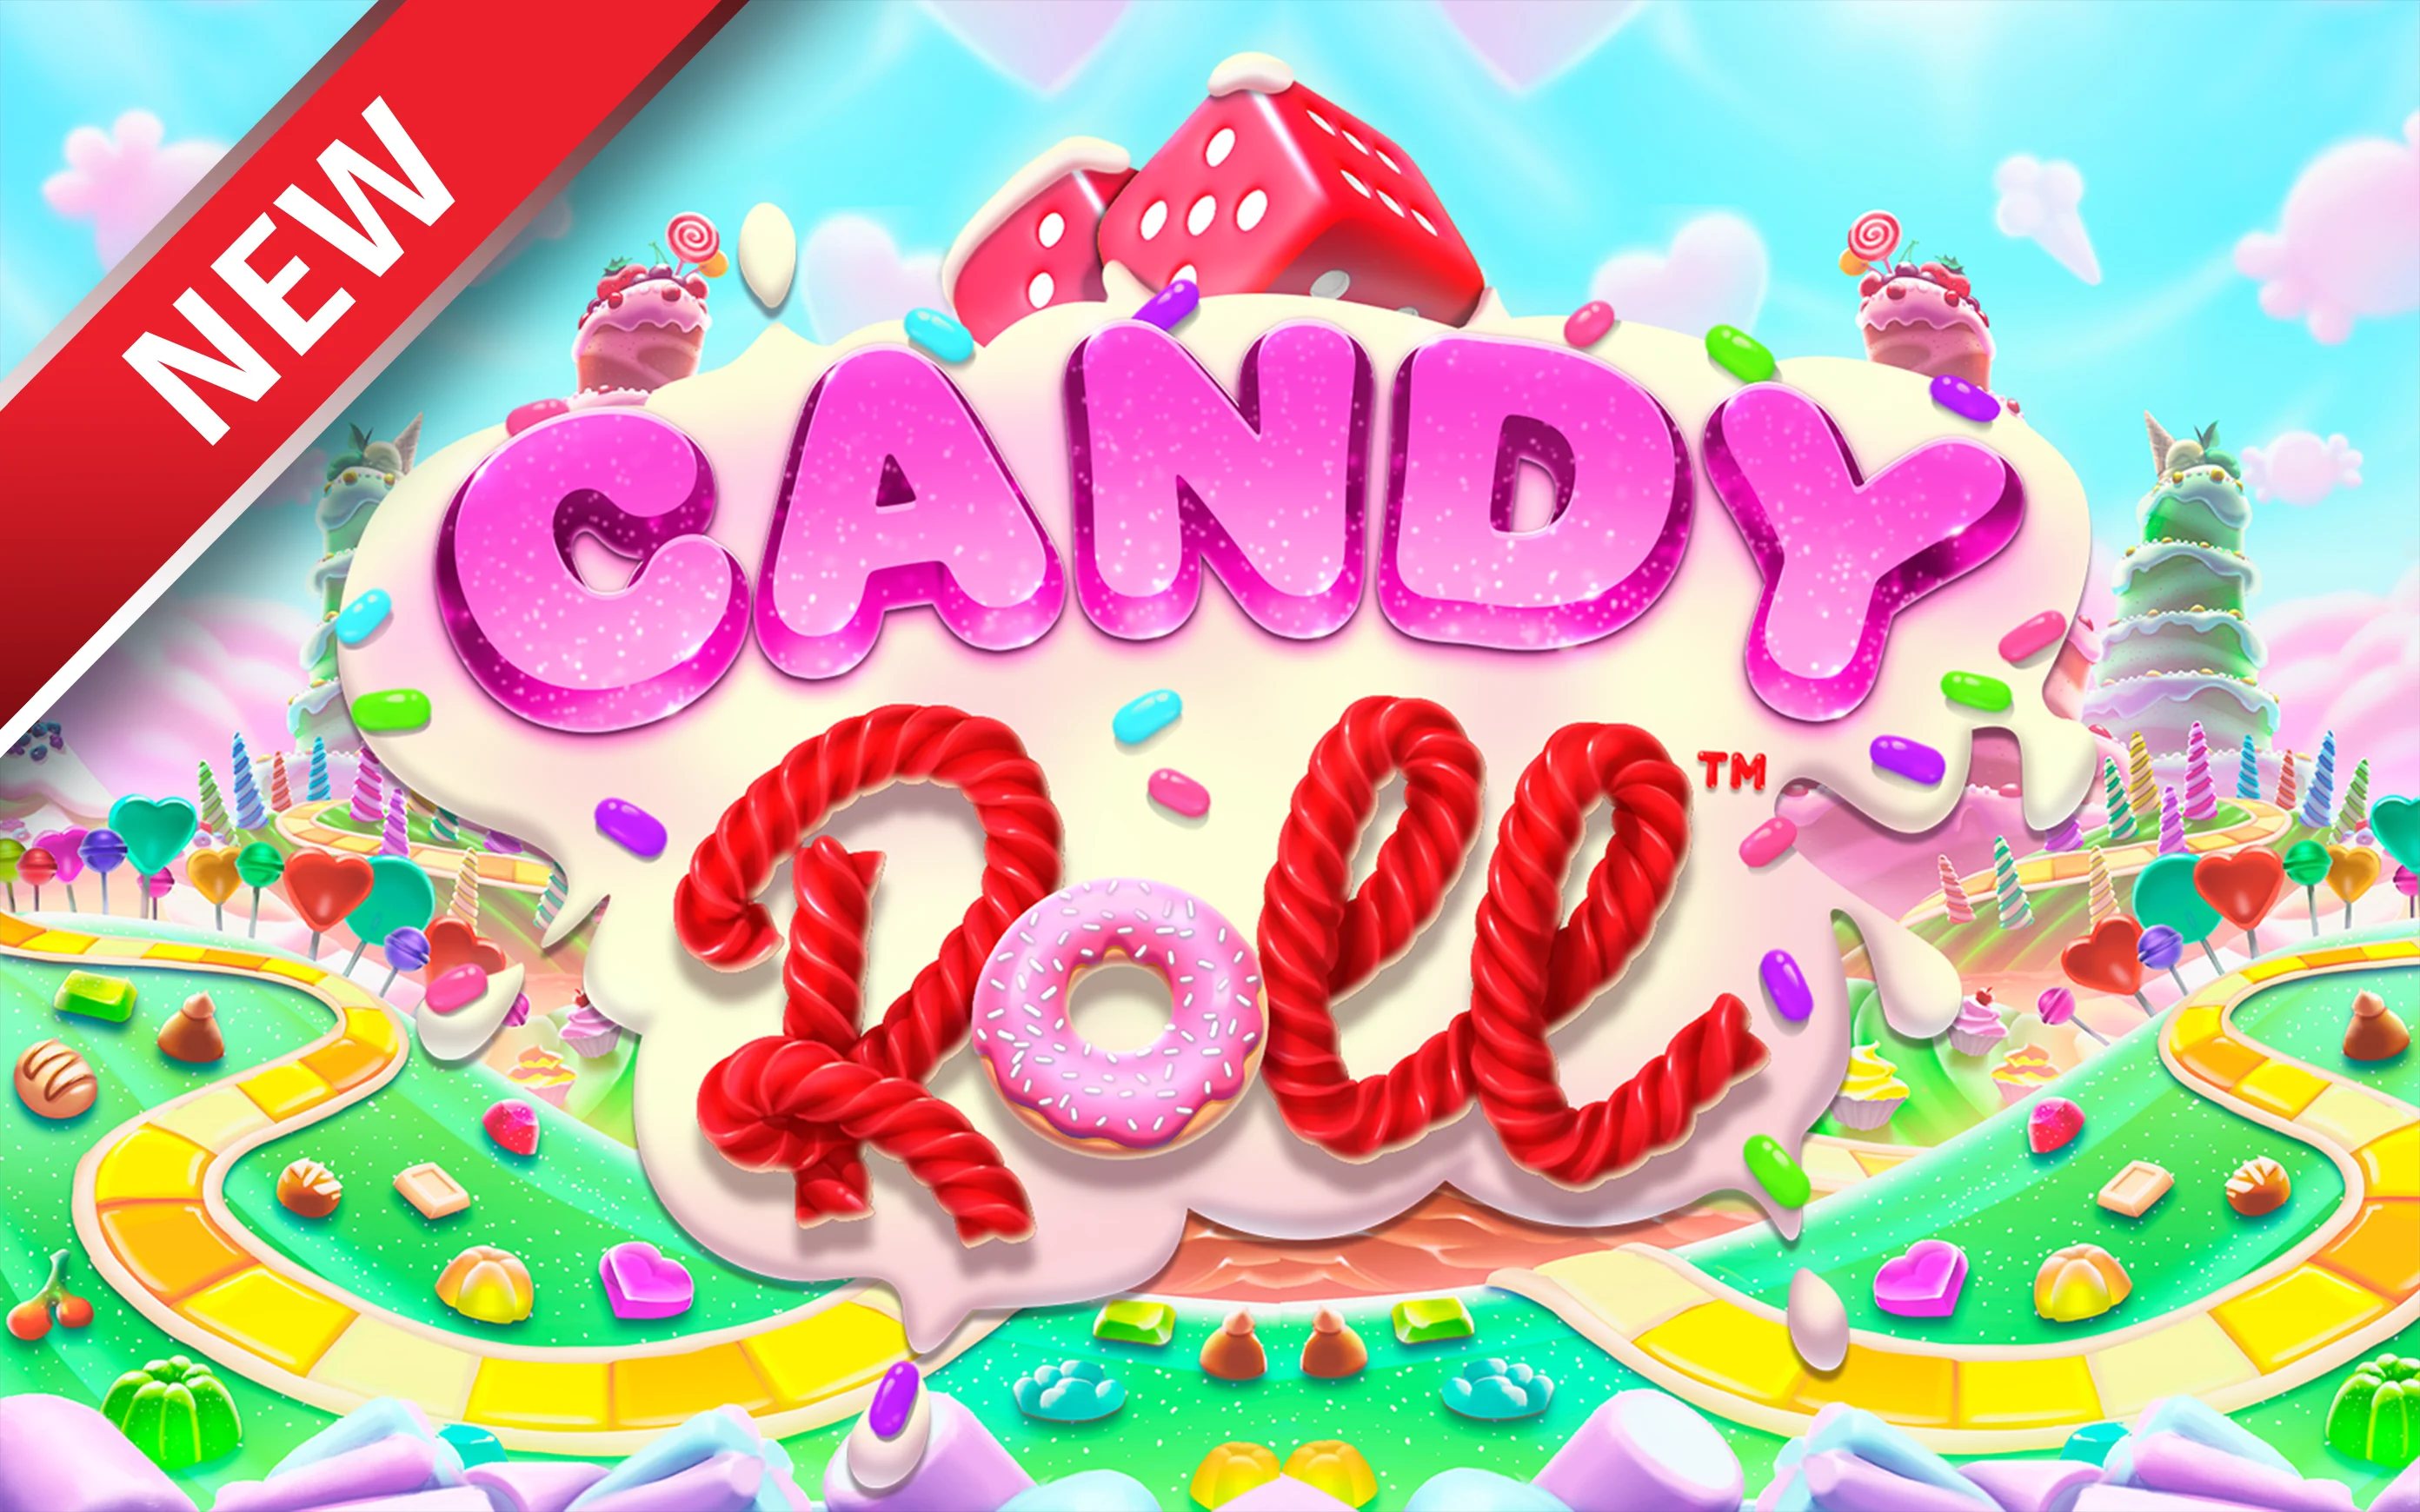 Spil Candy Roll™ på Starcasino.be online kasino
